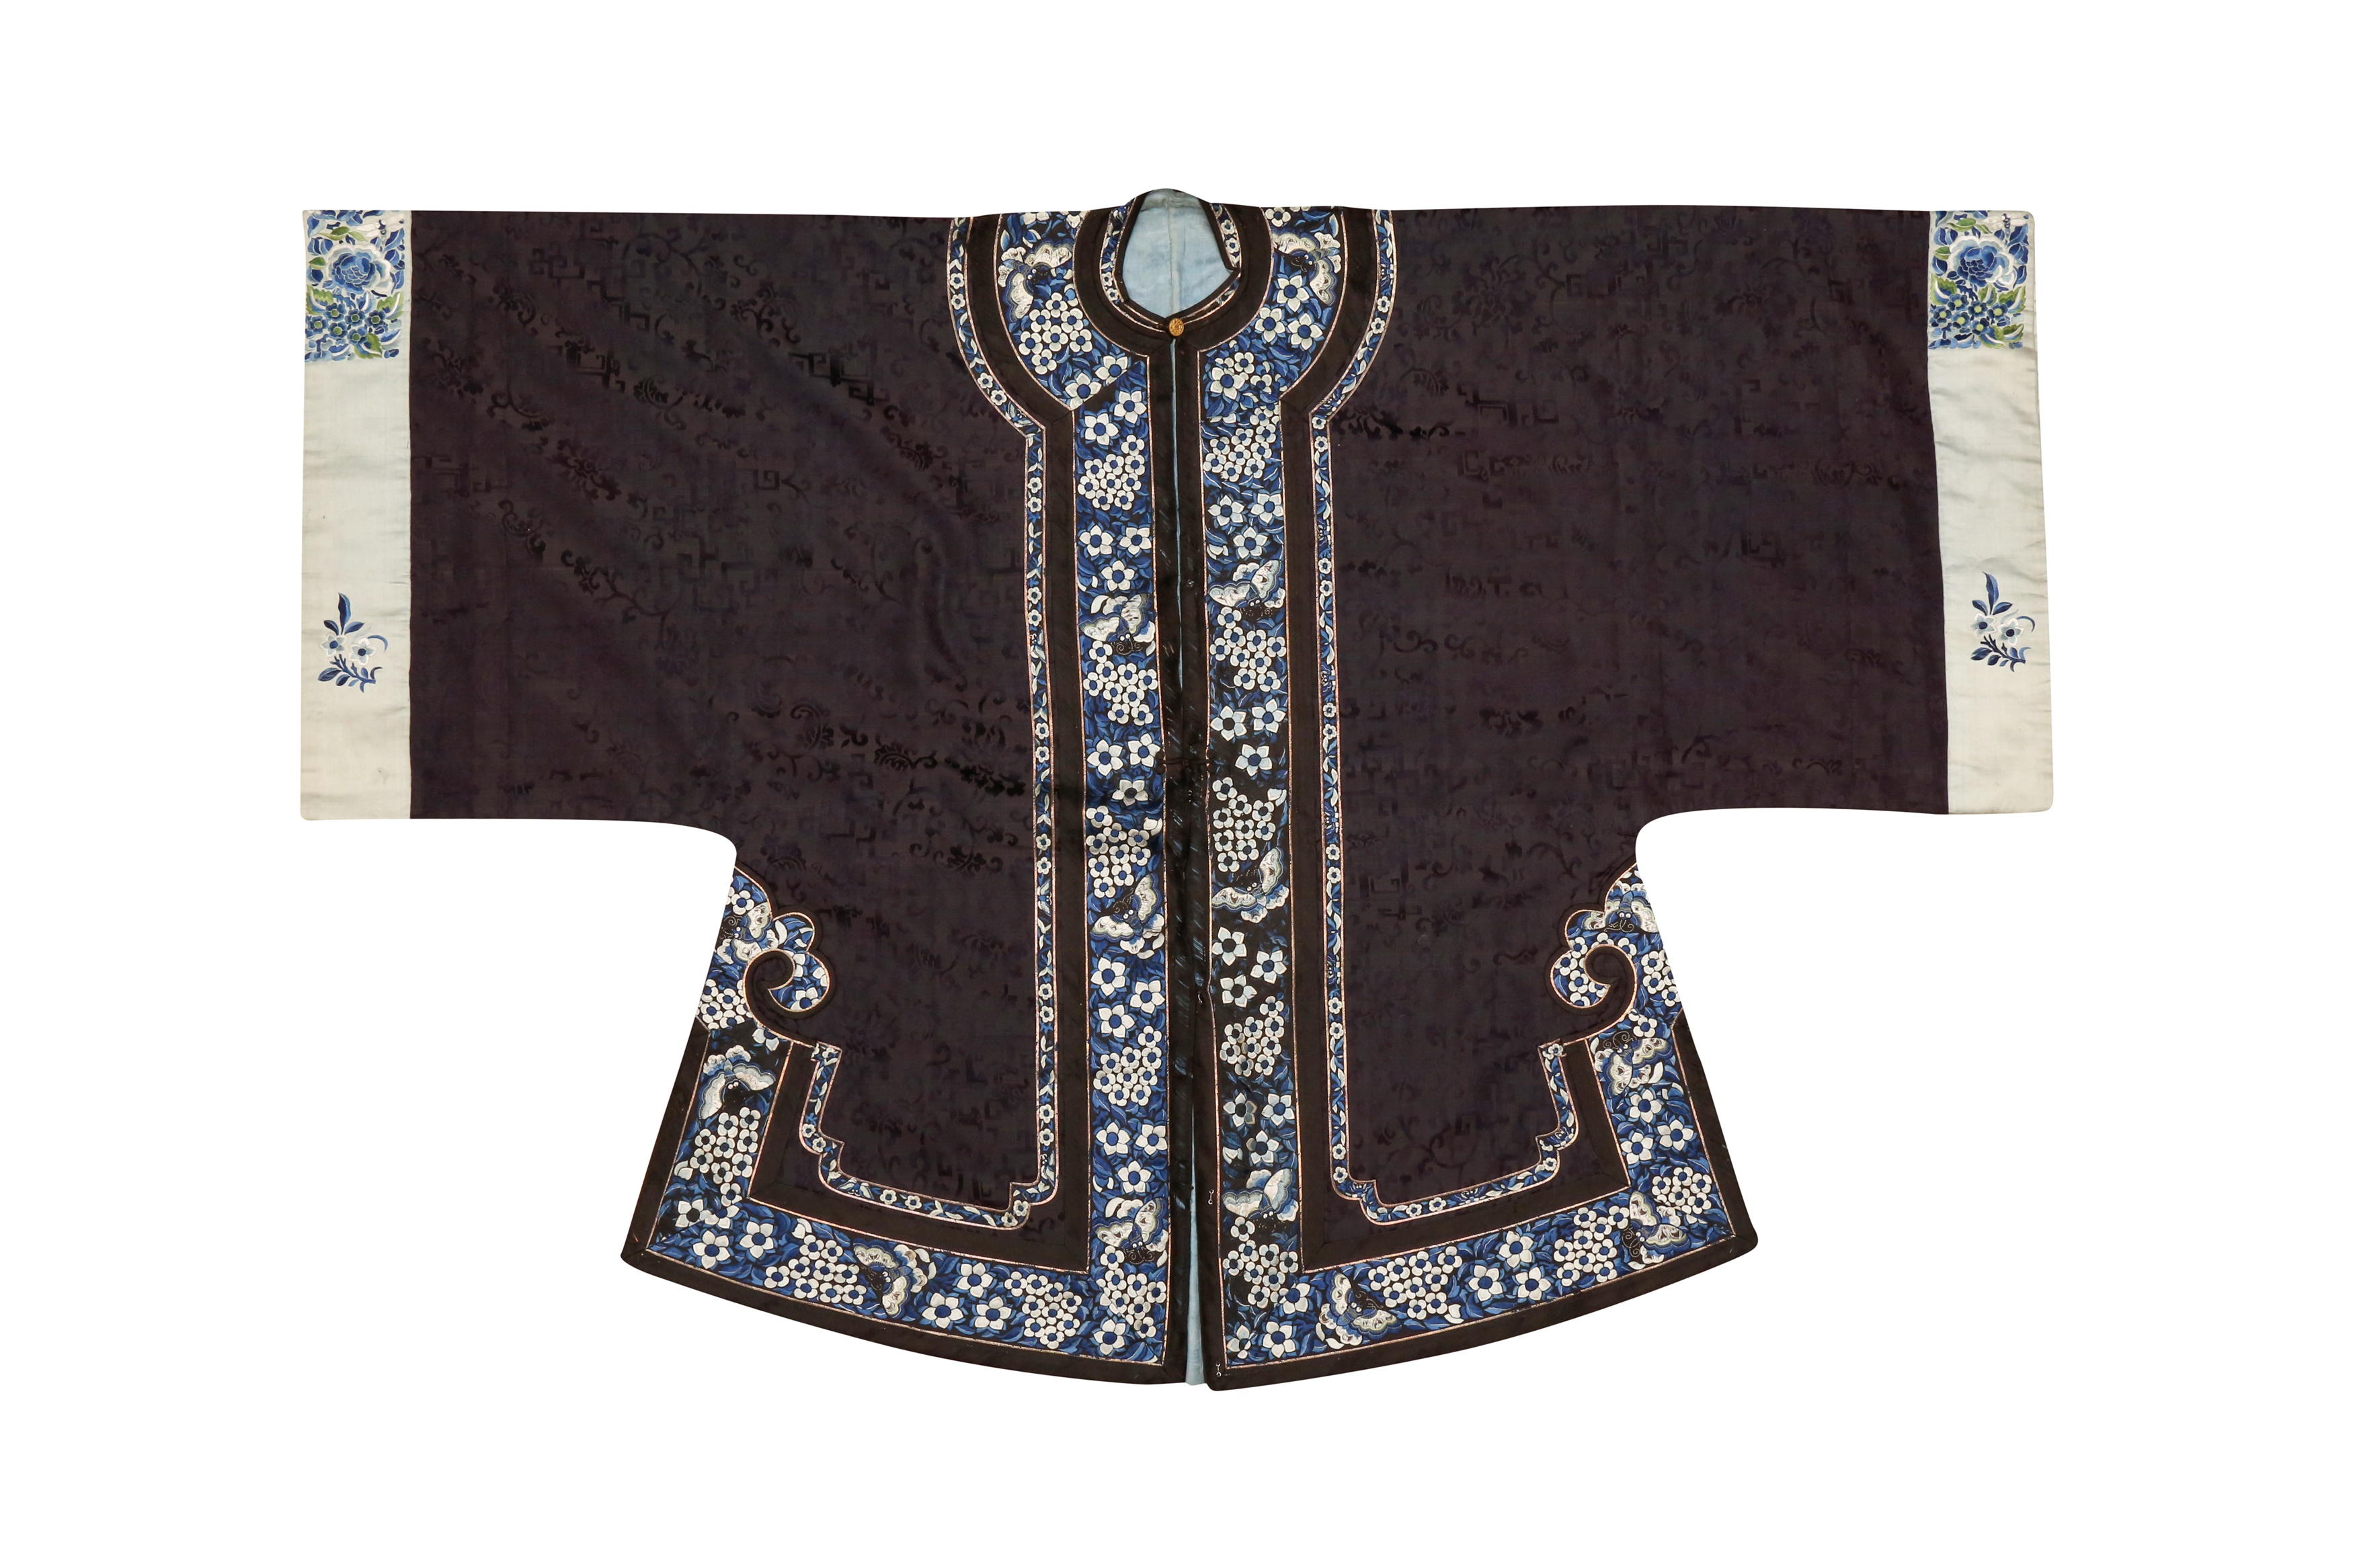 A CHINESE SILK EMBROIDERED ROBE 十九世紀 緞繡花果紋袍